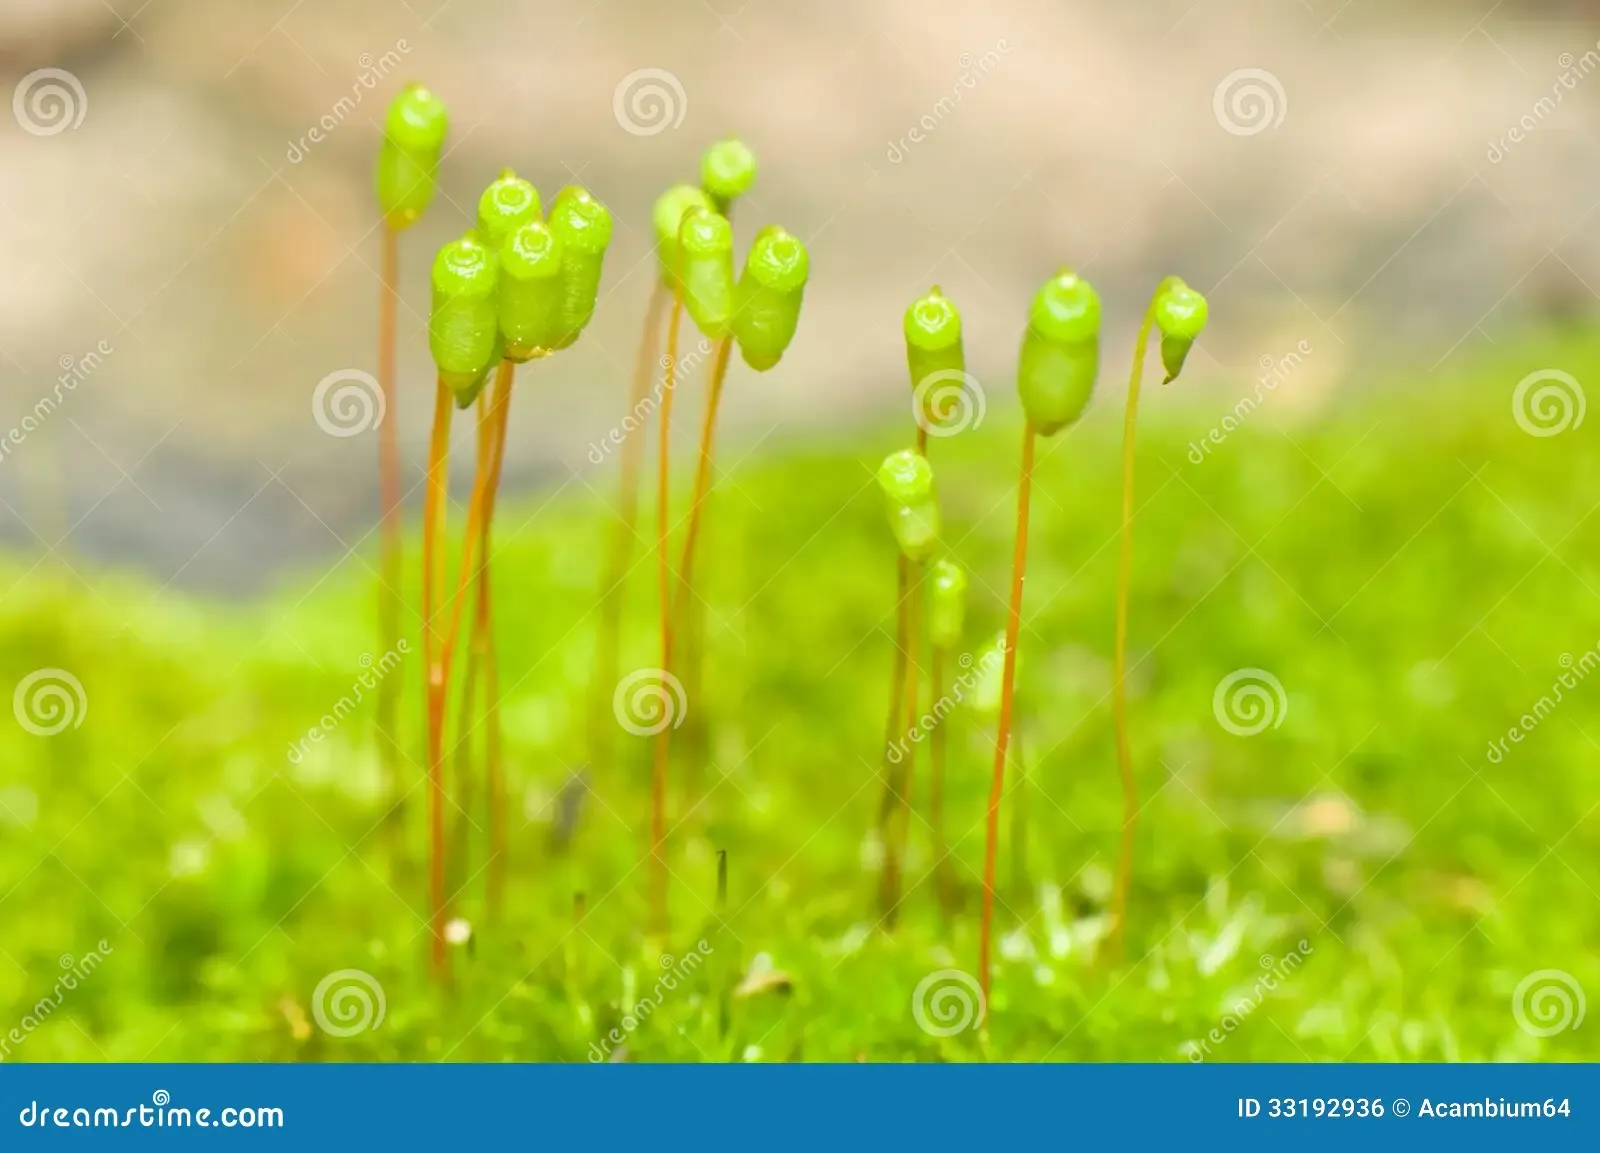 sporophytescapsule-van-moss-plant-close-omhoog-33192936.jpg